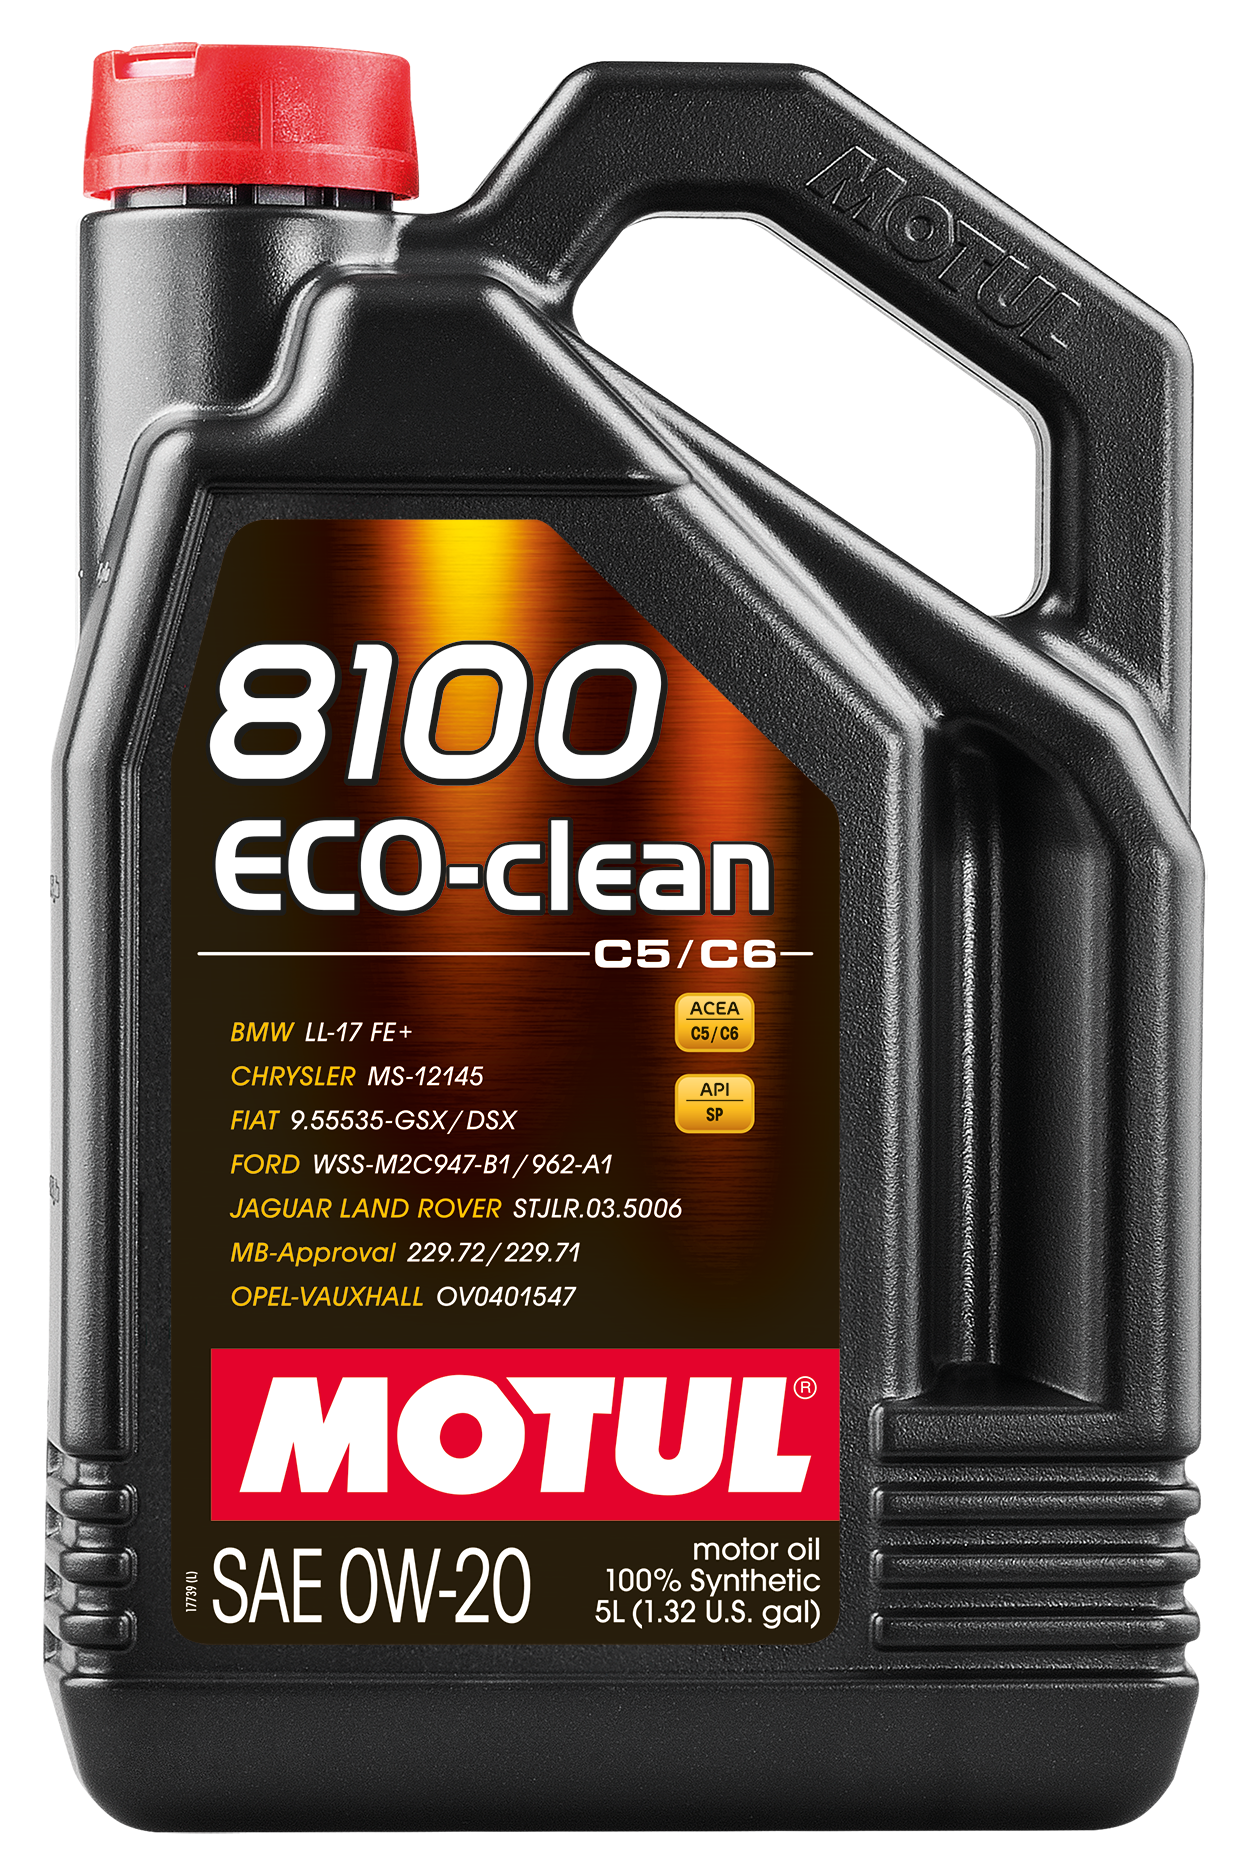 Motul 8100 ECO-CLEAN 0W-20, 5 liter